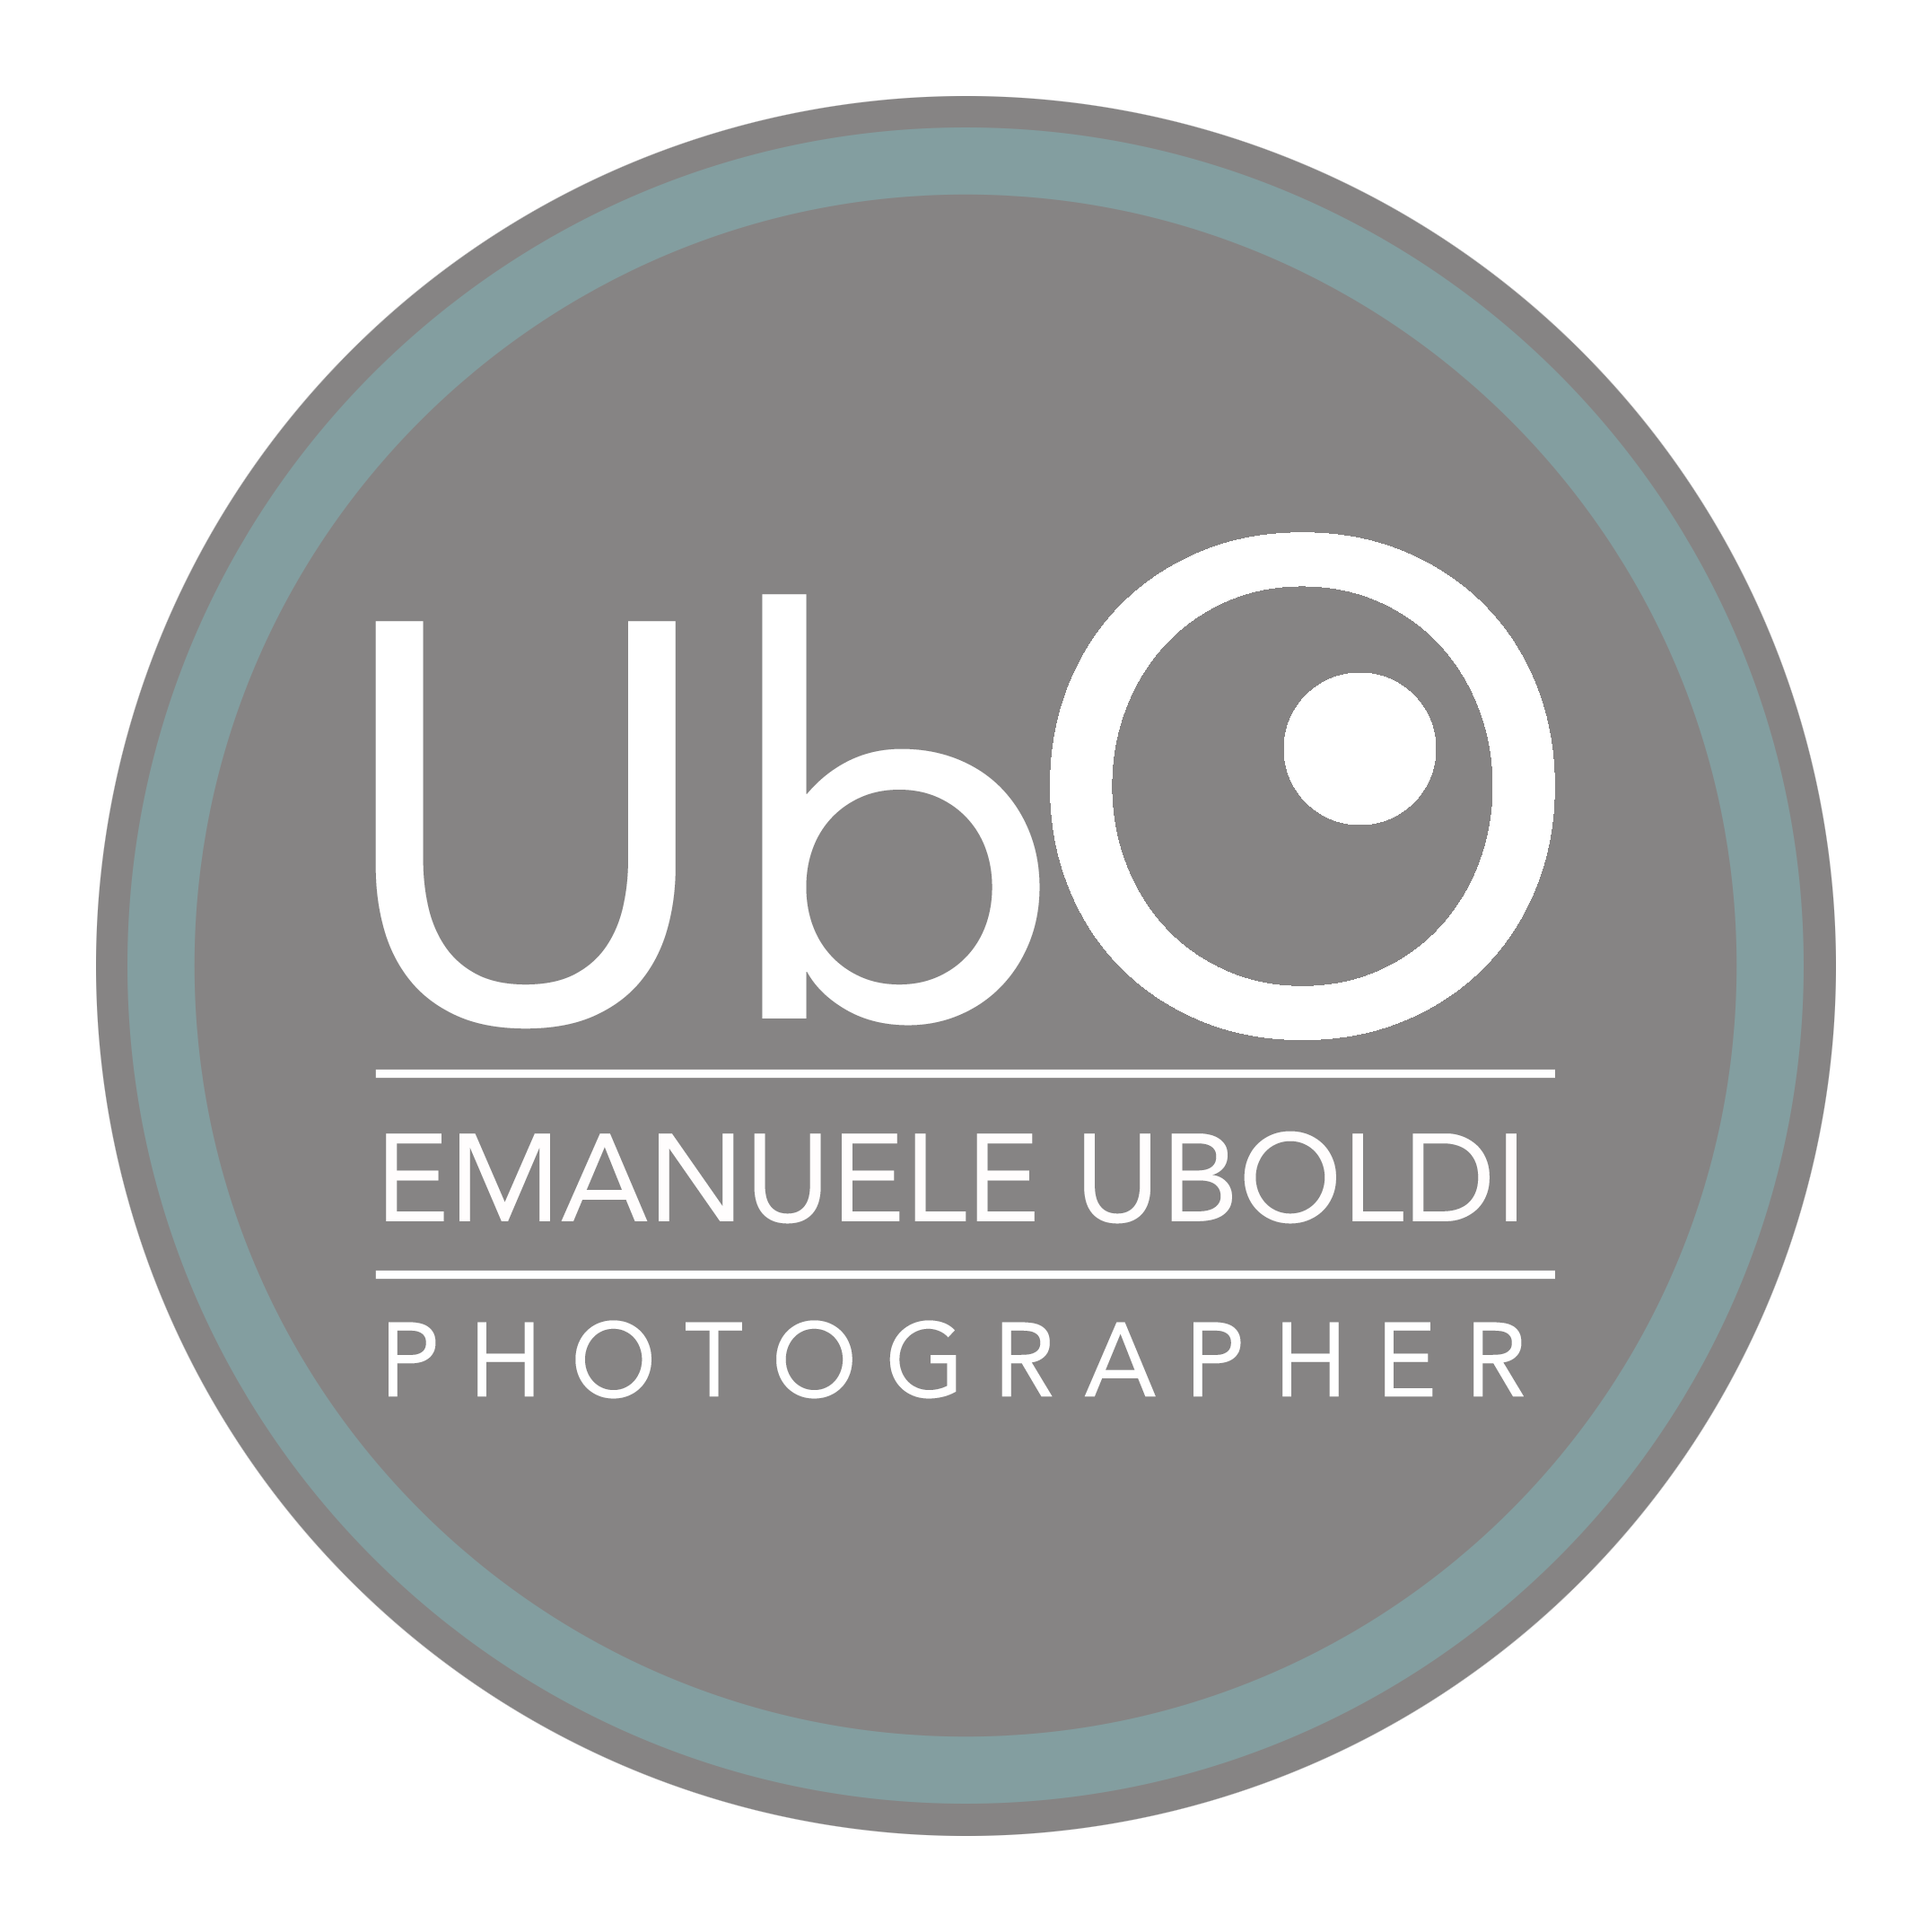 Vietnam - Emanuele Uboldi Studio Ubo Photographer